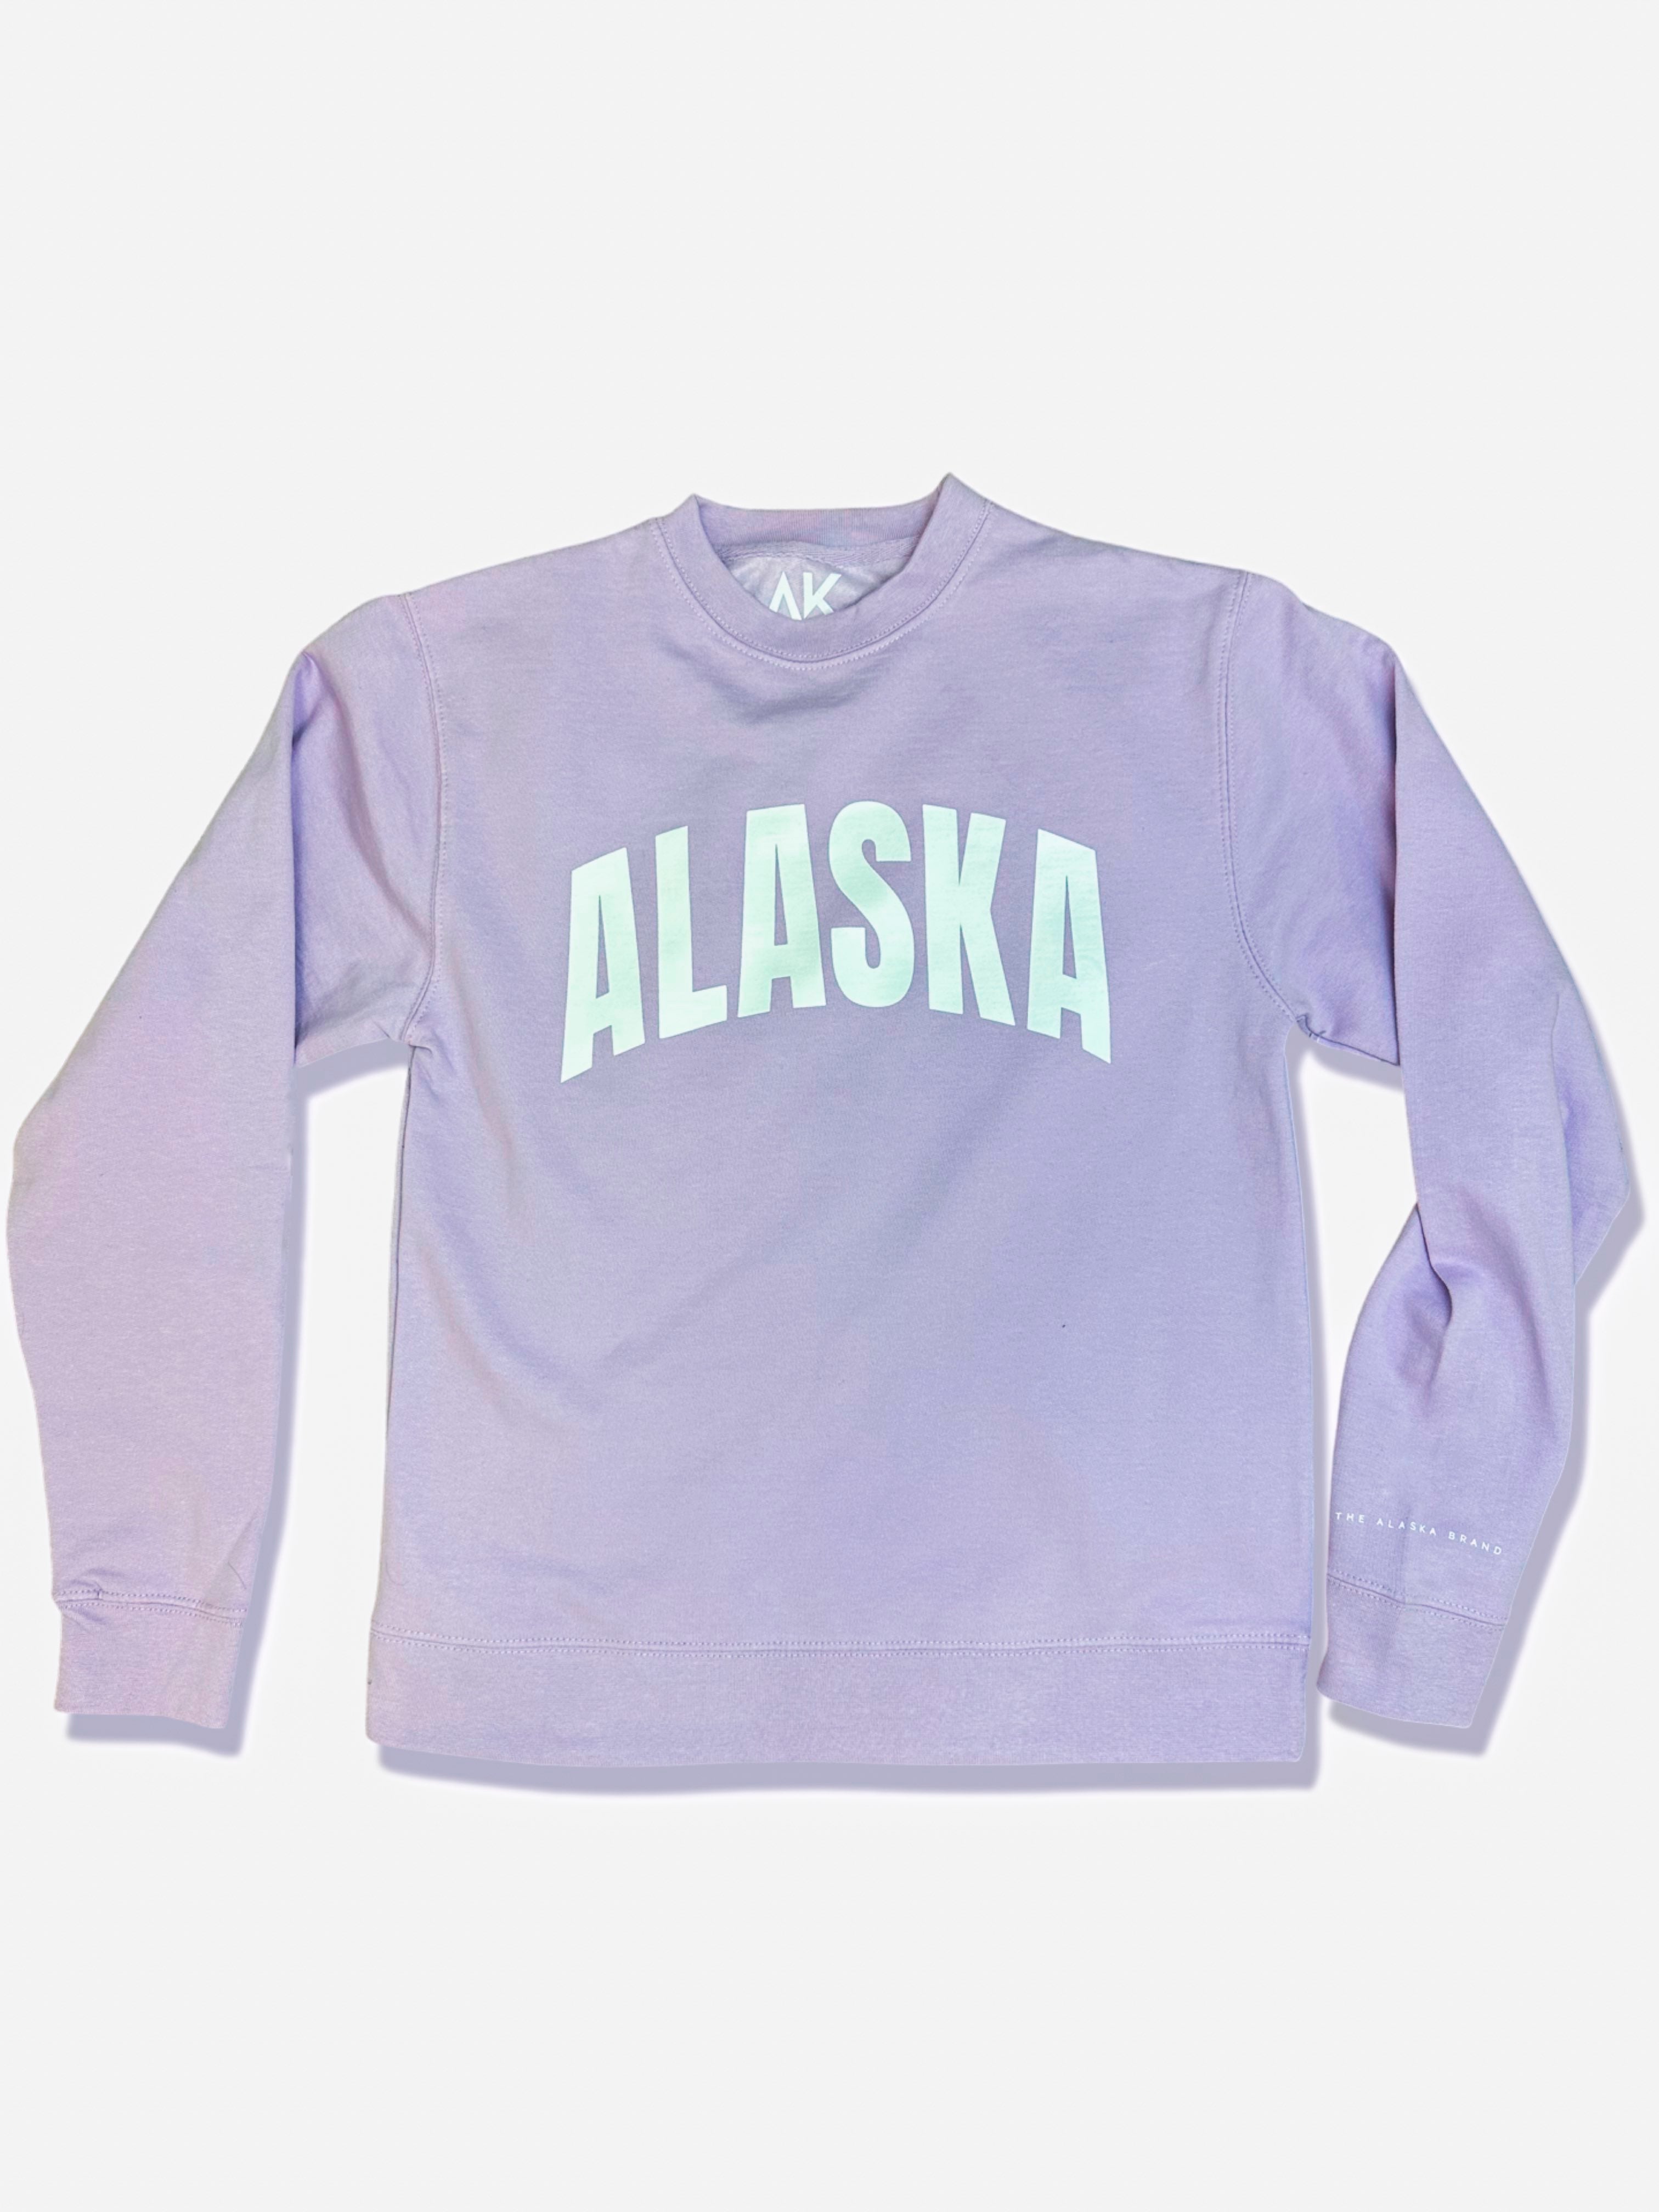 The Alaska Brand Pastel Crewneck - Light Pink